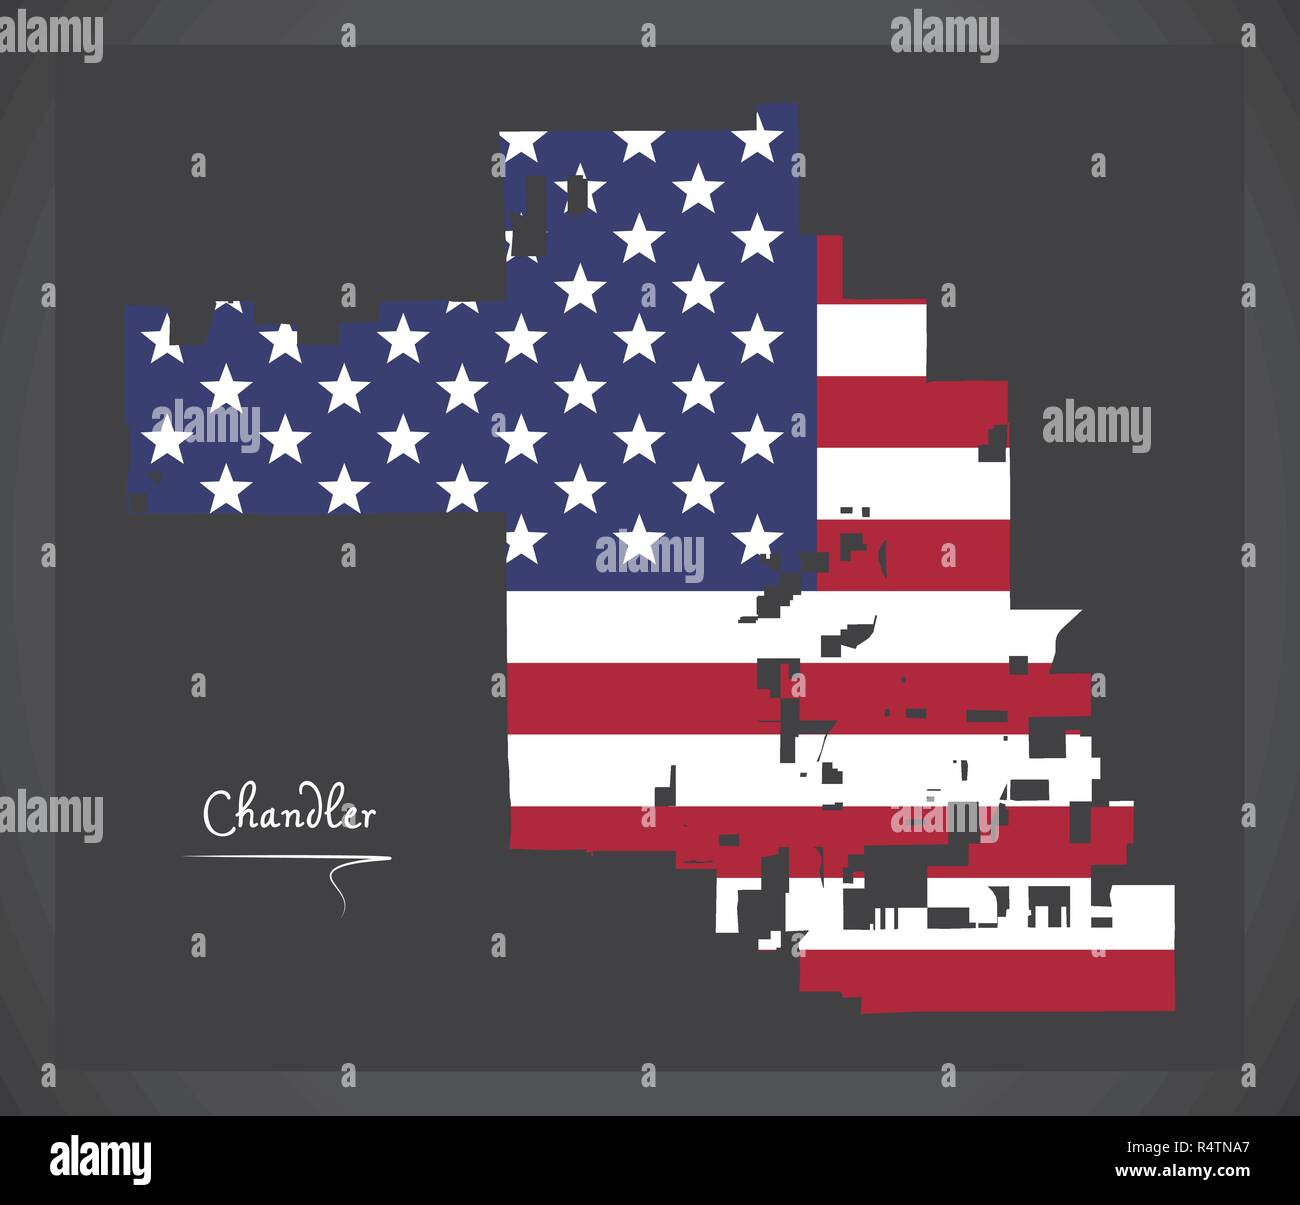 Chandler Arizona City map with American national flag illustration Stock Vector